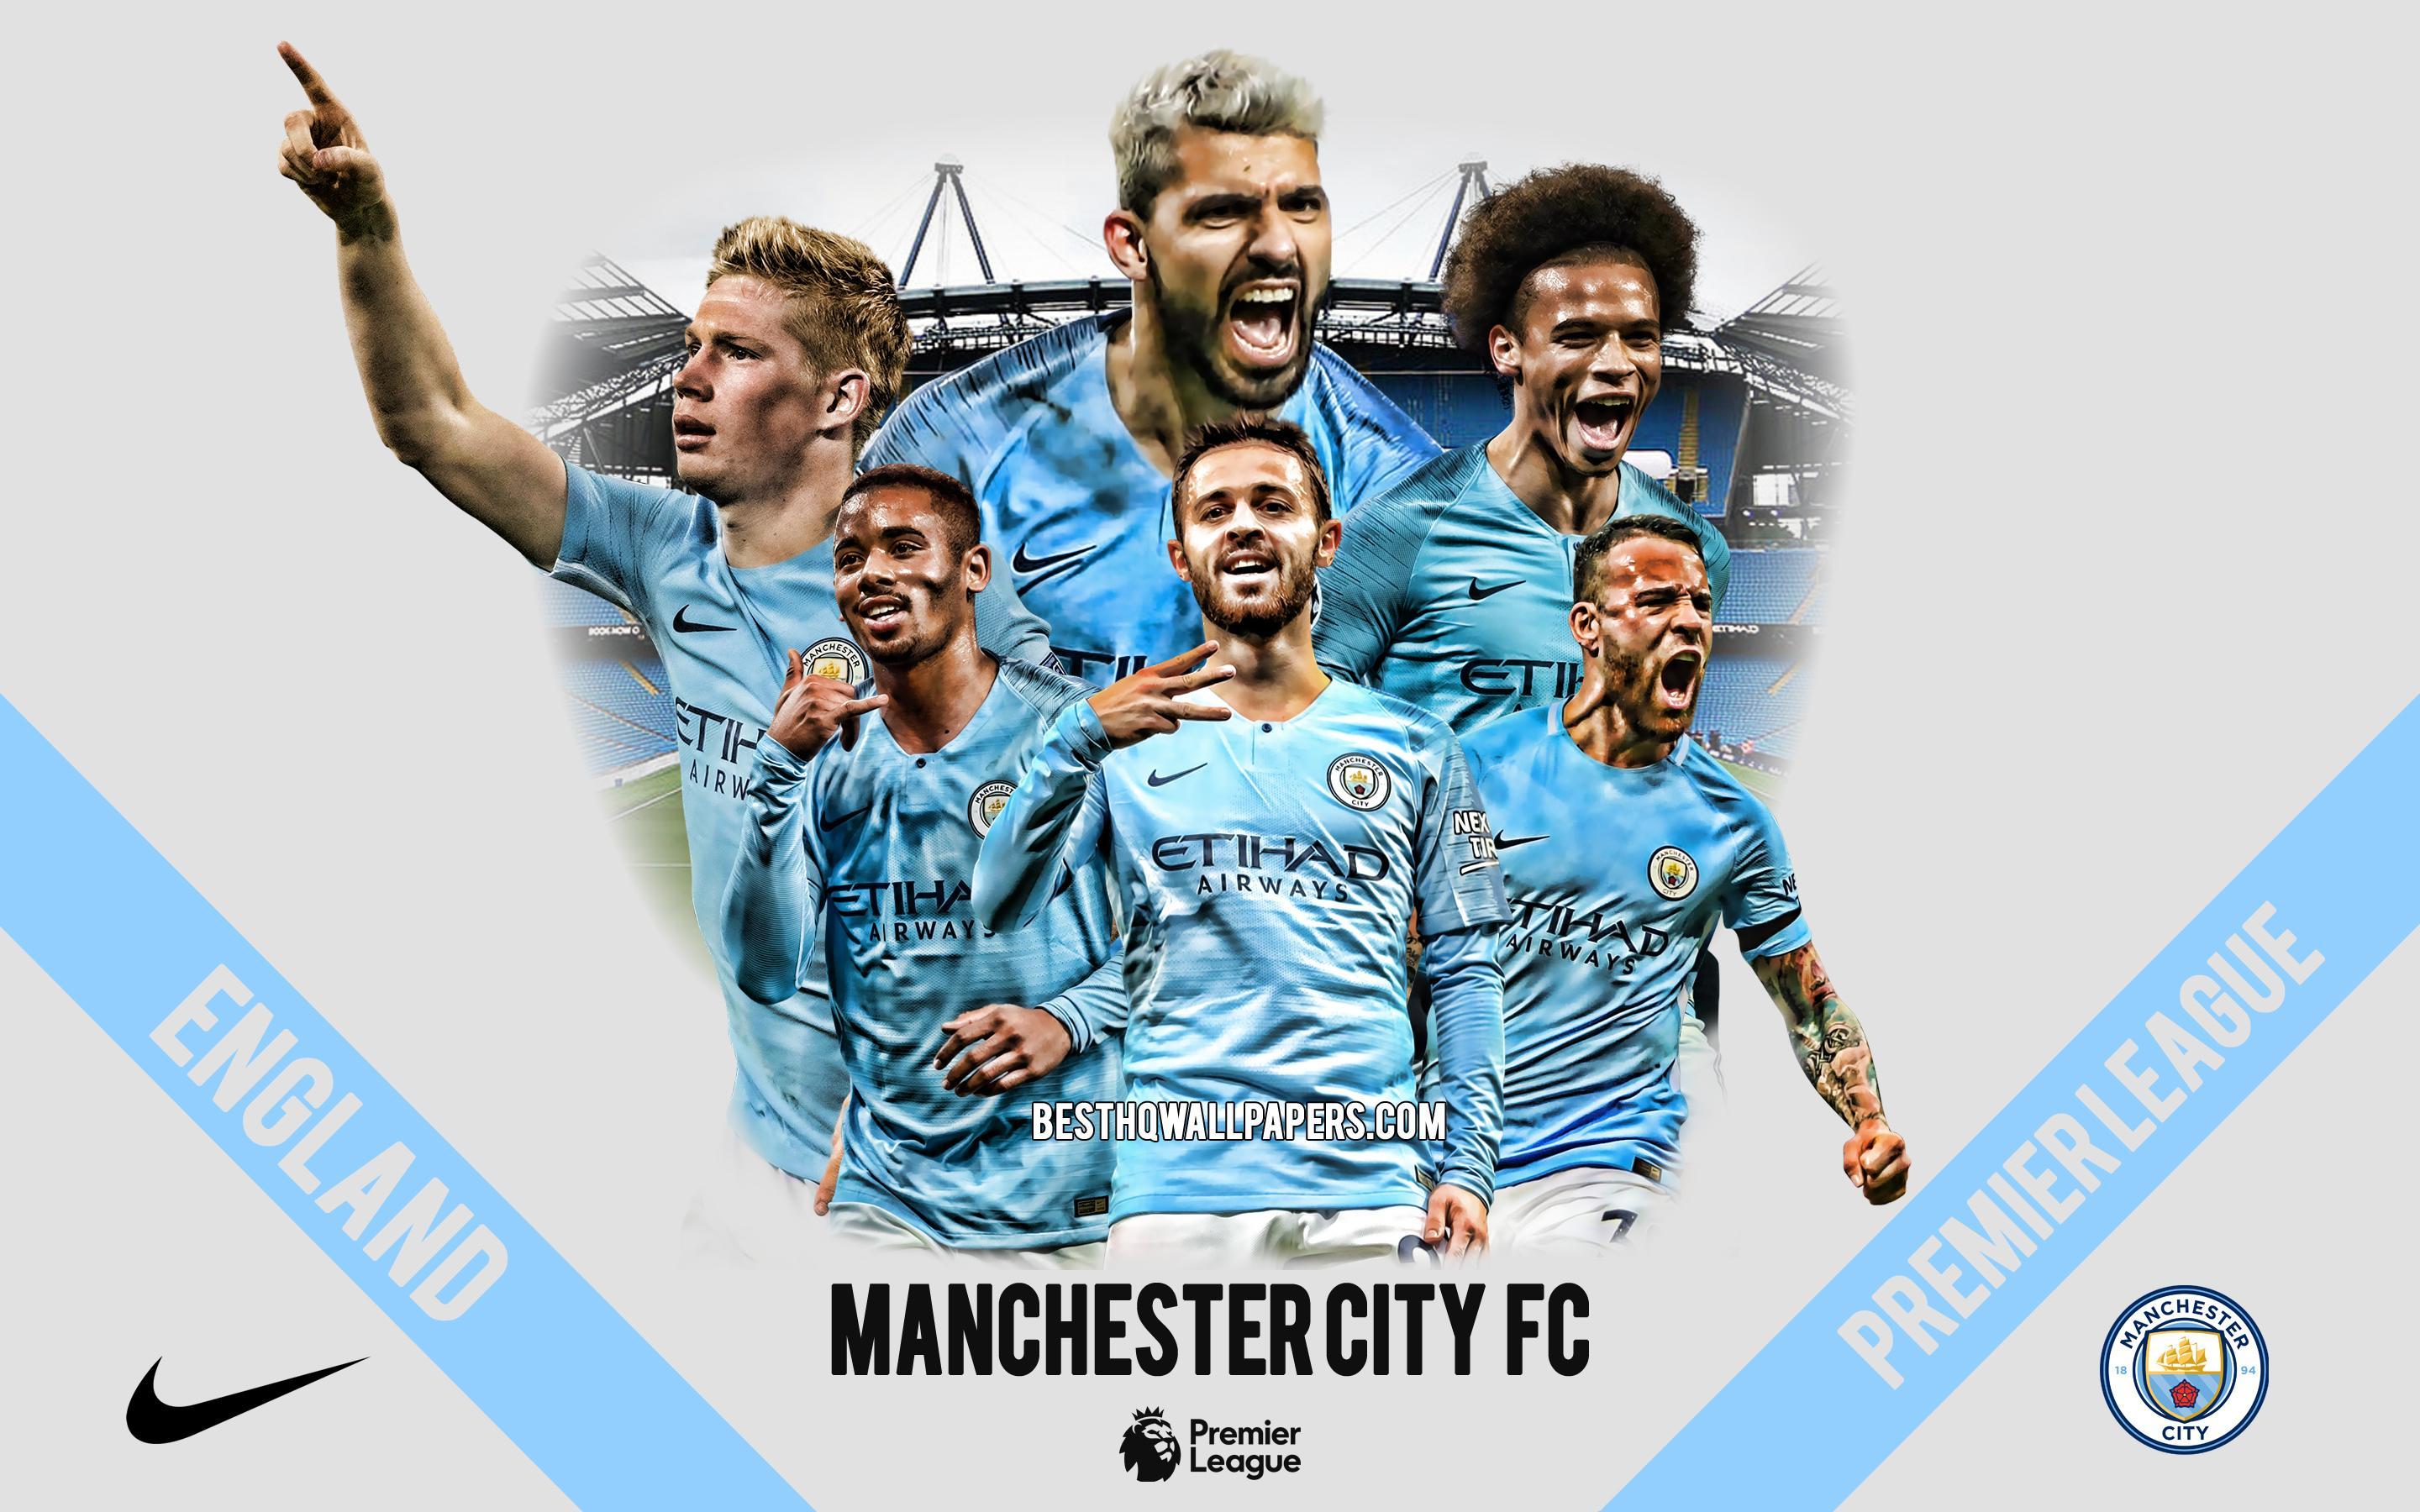 Manchester City Football Club Wallpaper Free Manchester City Football Club Background